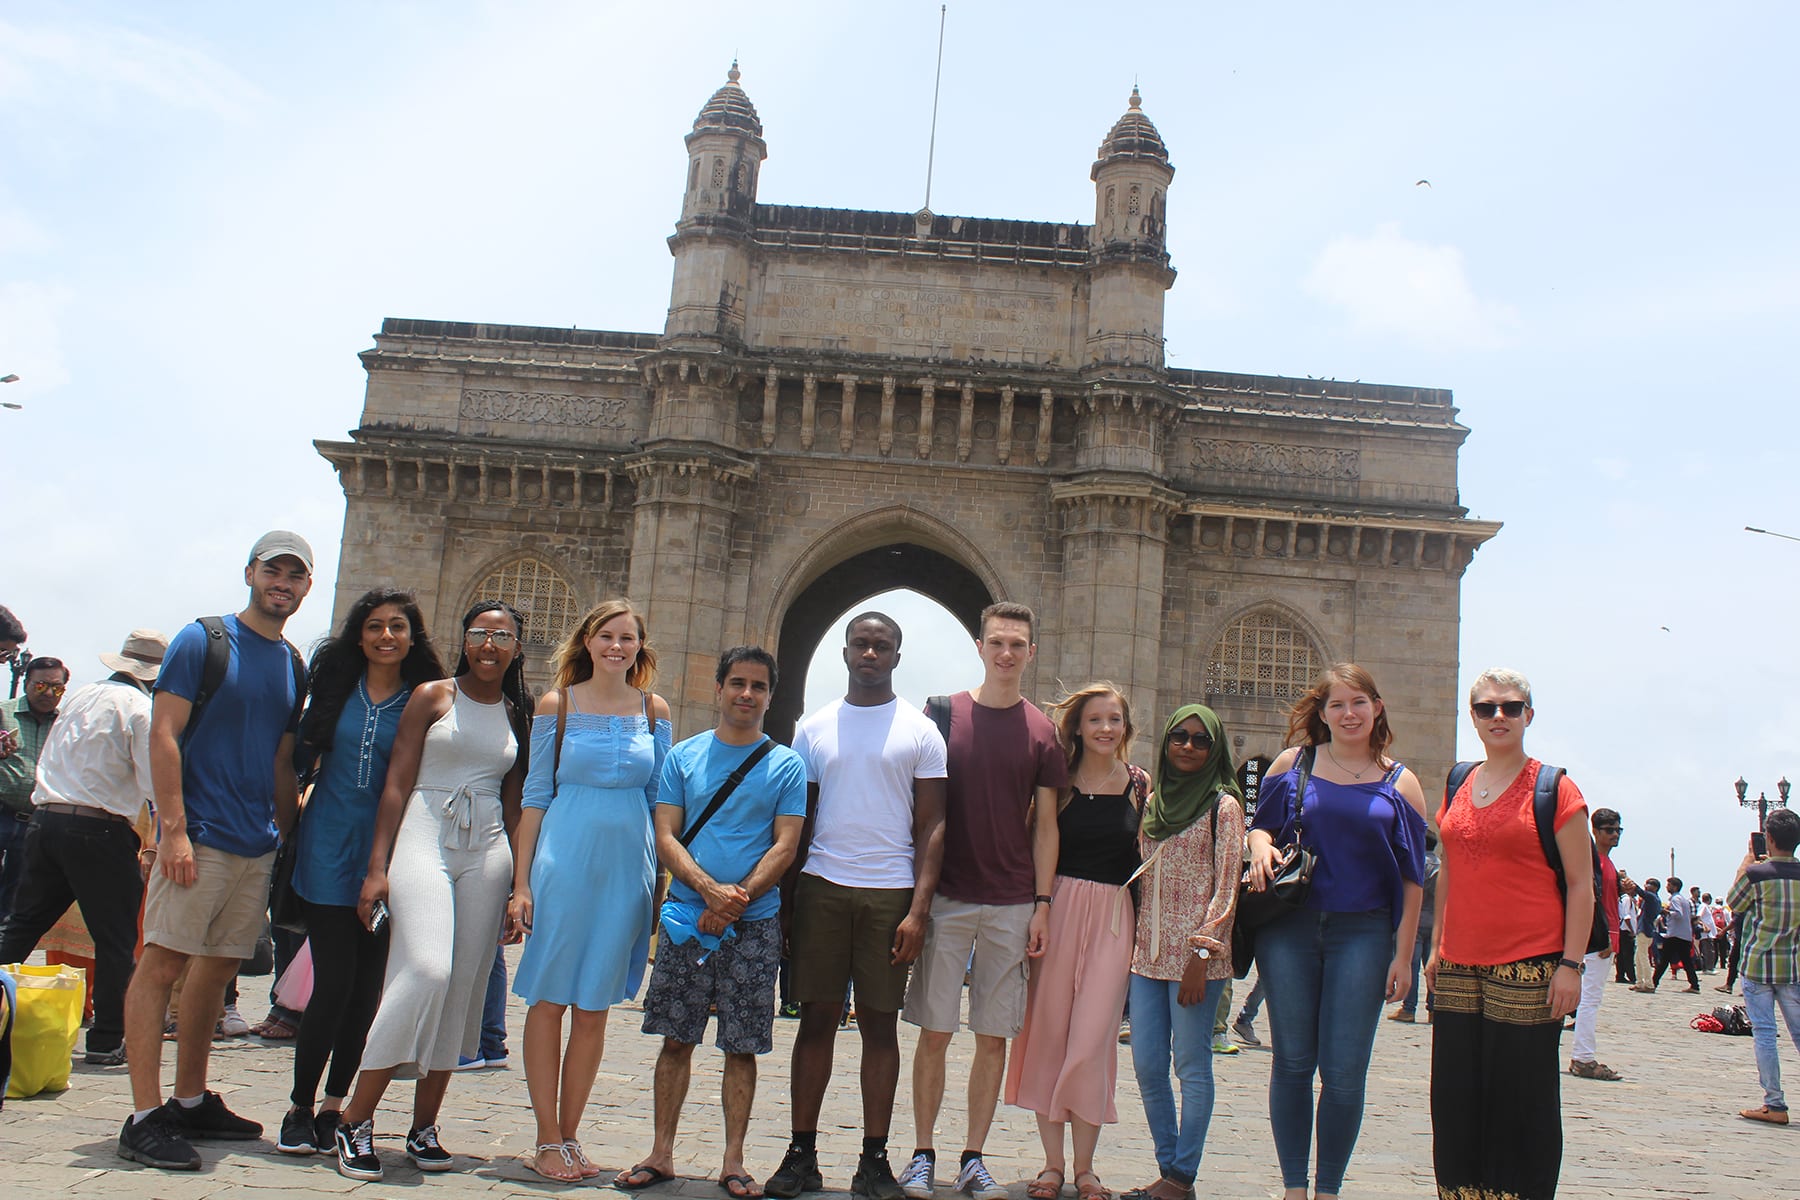 University of Southampton students are engaged in Spark India 2017 Fellowship Programme in suburban Mumbai